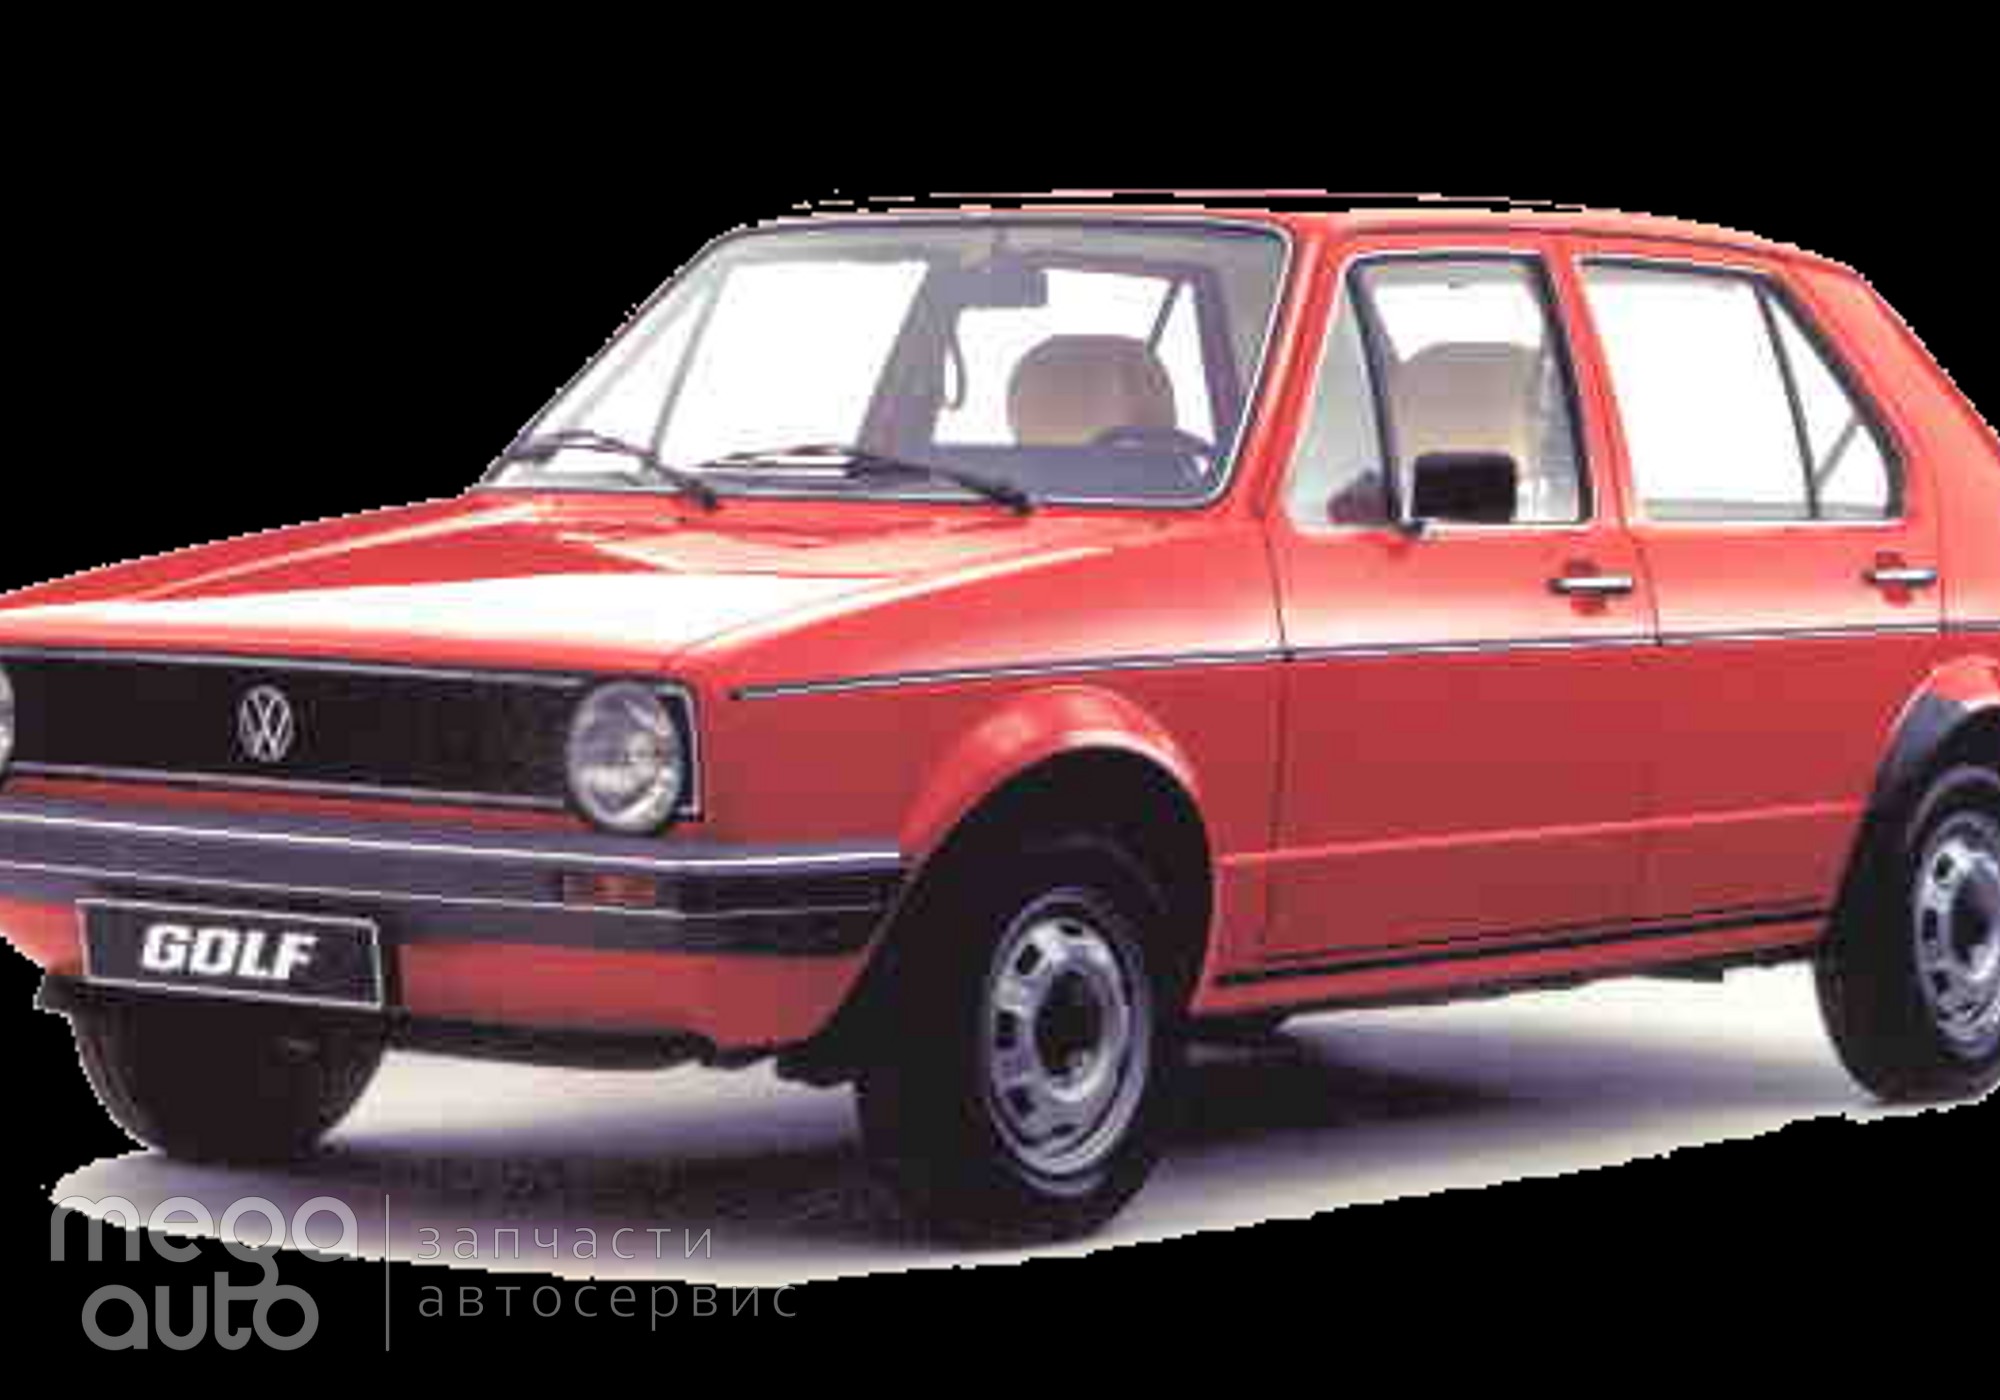 Volkswagen Golf I 1982 г. в разборе